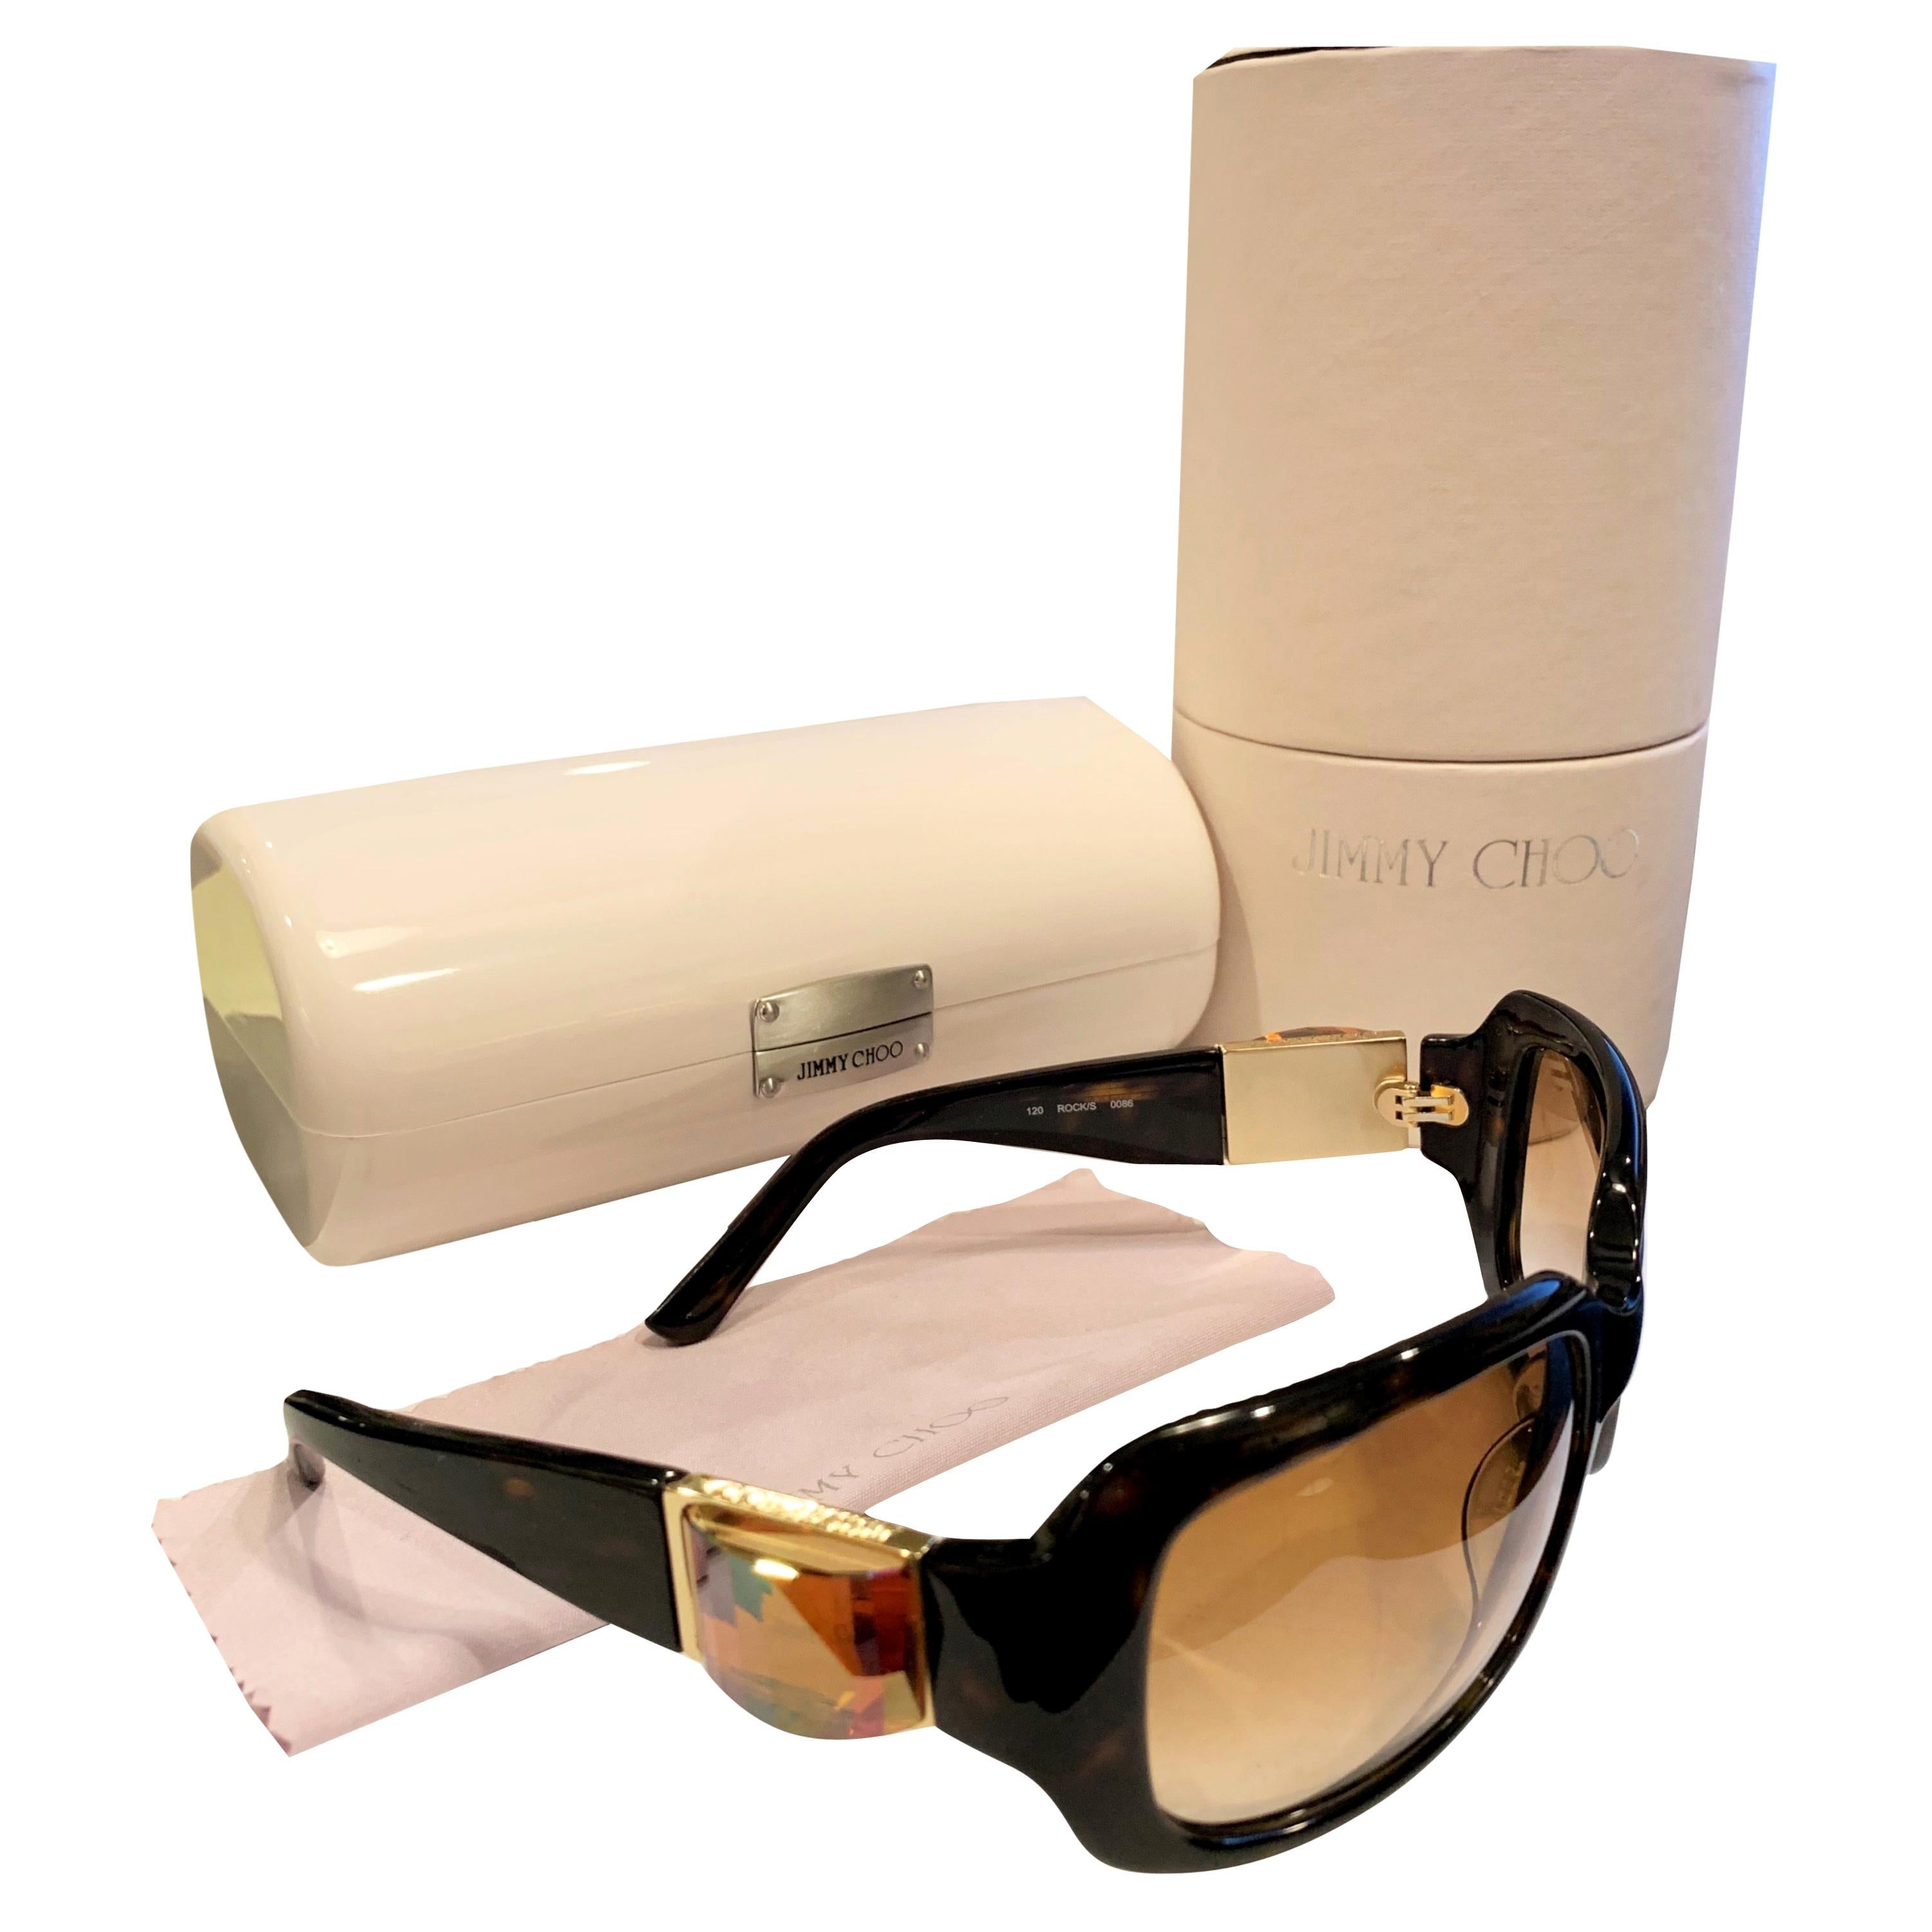 New Jimmy Choo Swarovski Sunglasses With Case & Box $595